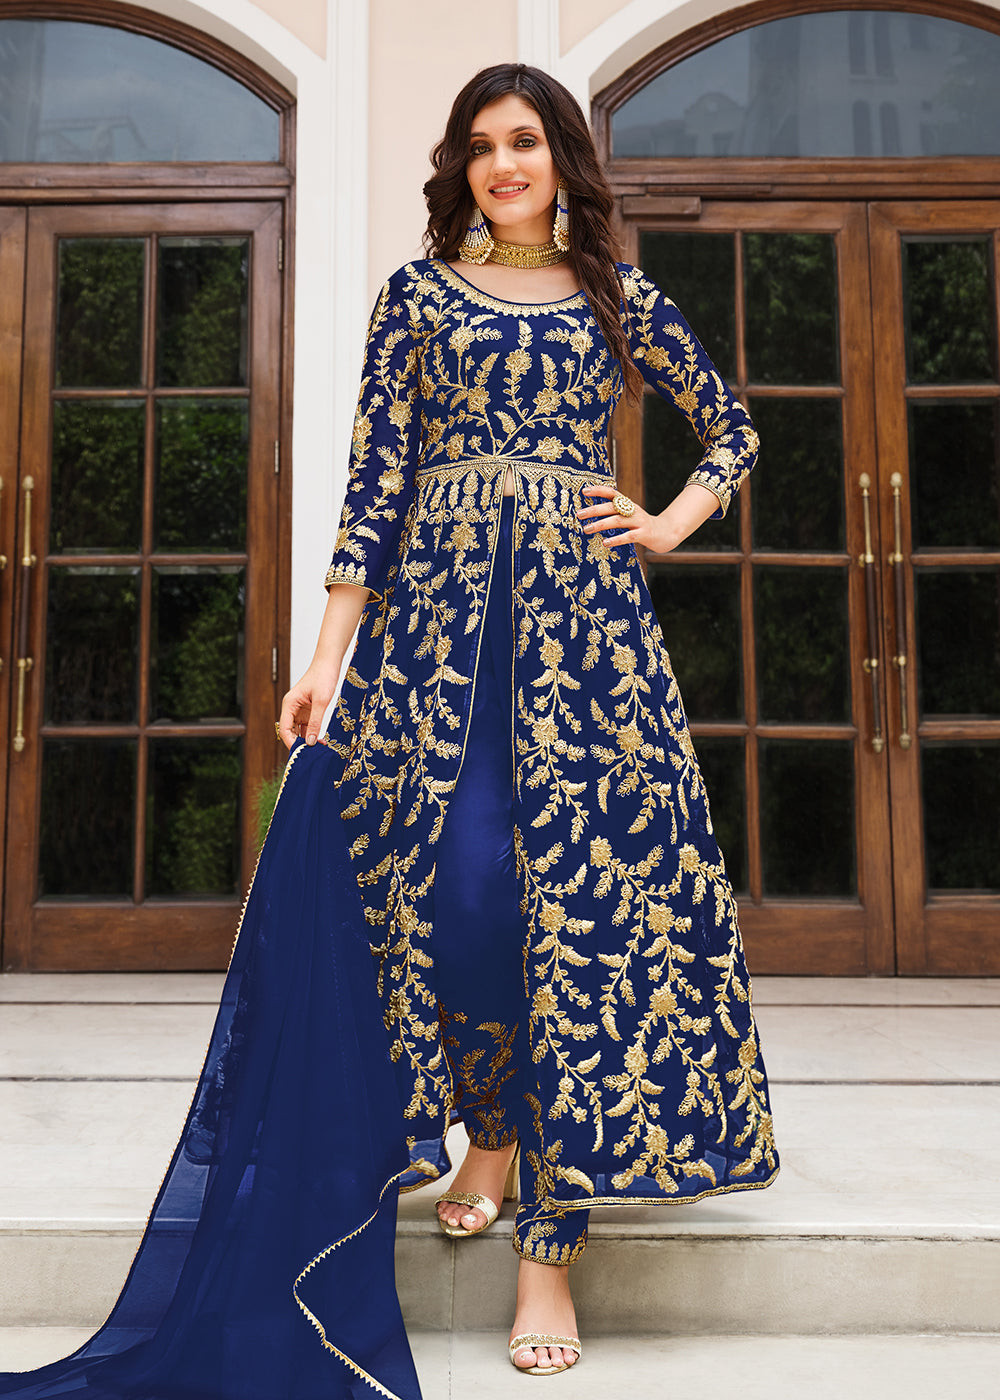 Buy Now Lovely Navy Blue Designer Front Slit Anarkali Dress Online in USA, UK, Australia, New Zealand, Canada & Worldwide at Empress Clothing.